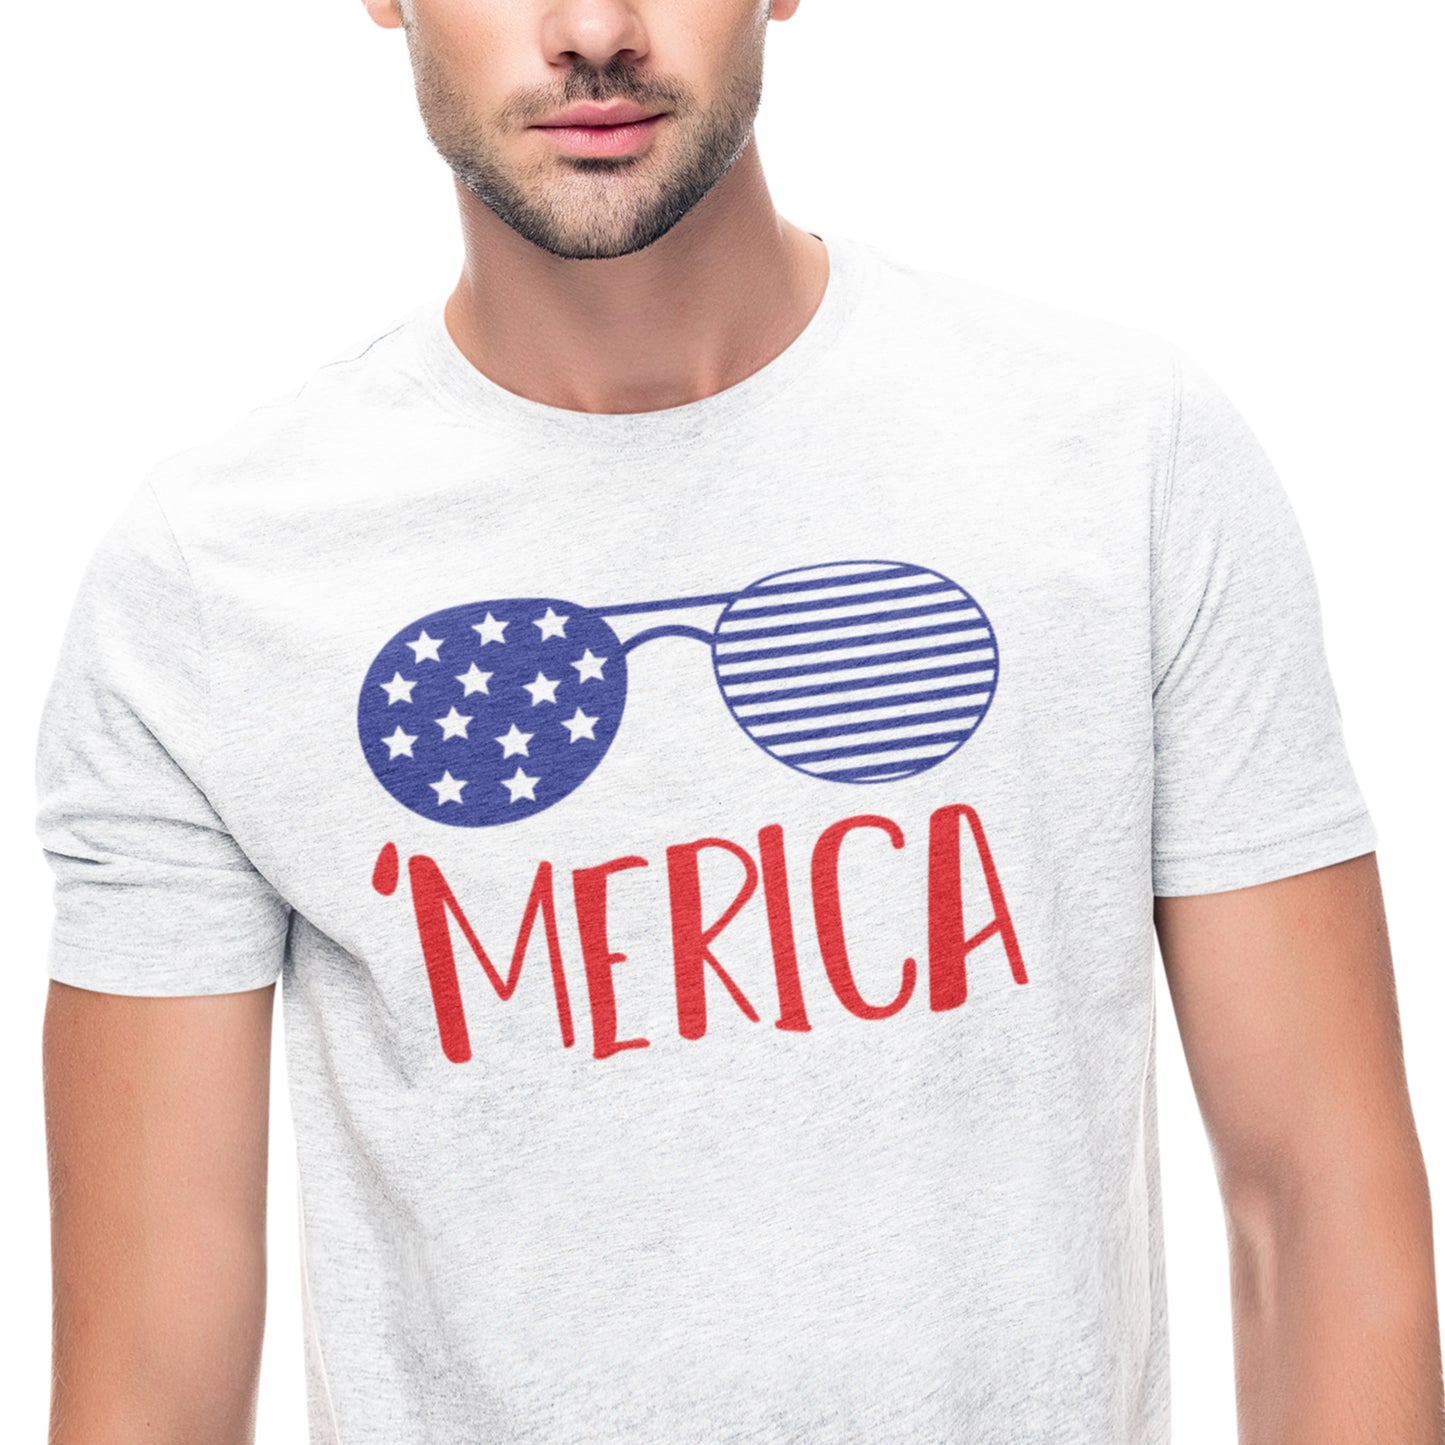 Merica Shirt Unisex Shirt, 4th Of July Shirt, Patriotic 4th of July Shirt, Merica Glasses Shirt, 4th of July Glasses Shirt